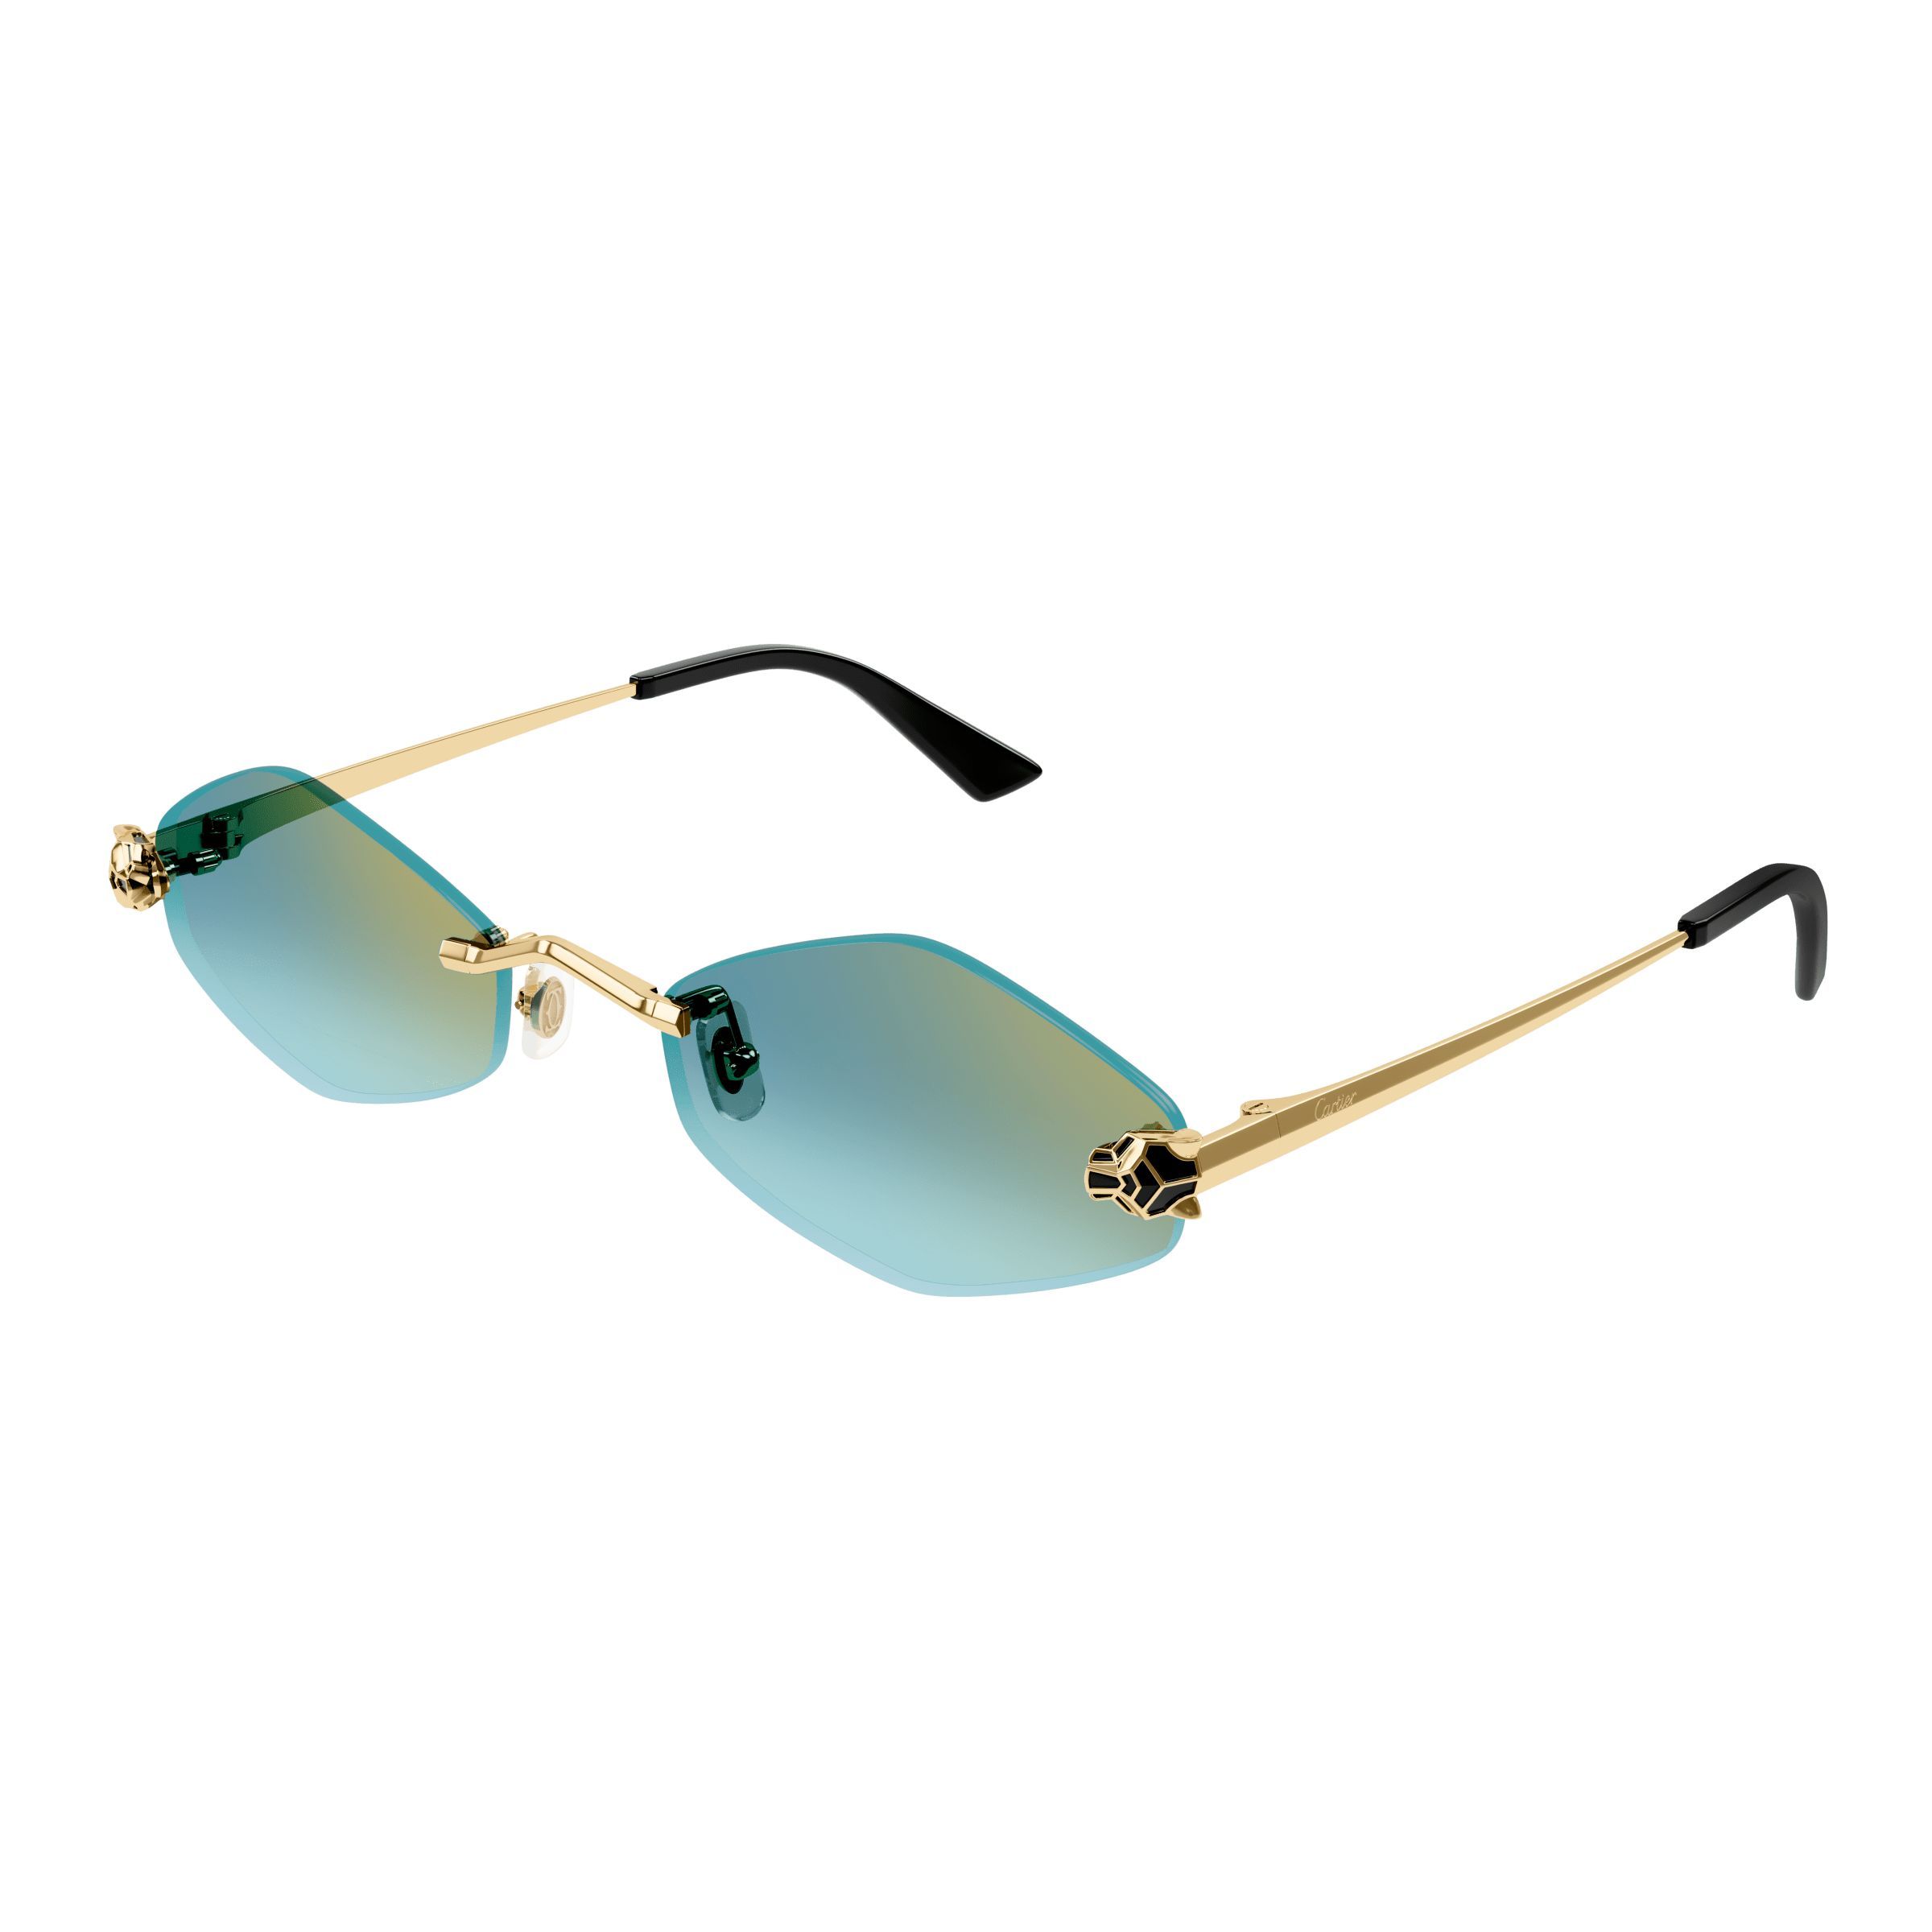 CT0433S Irregular Sunglasses 003 - size 55